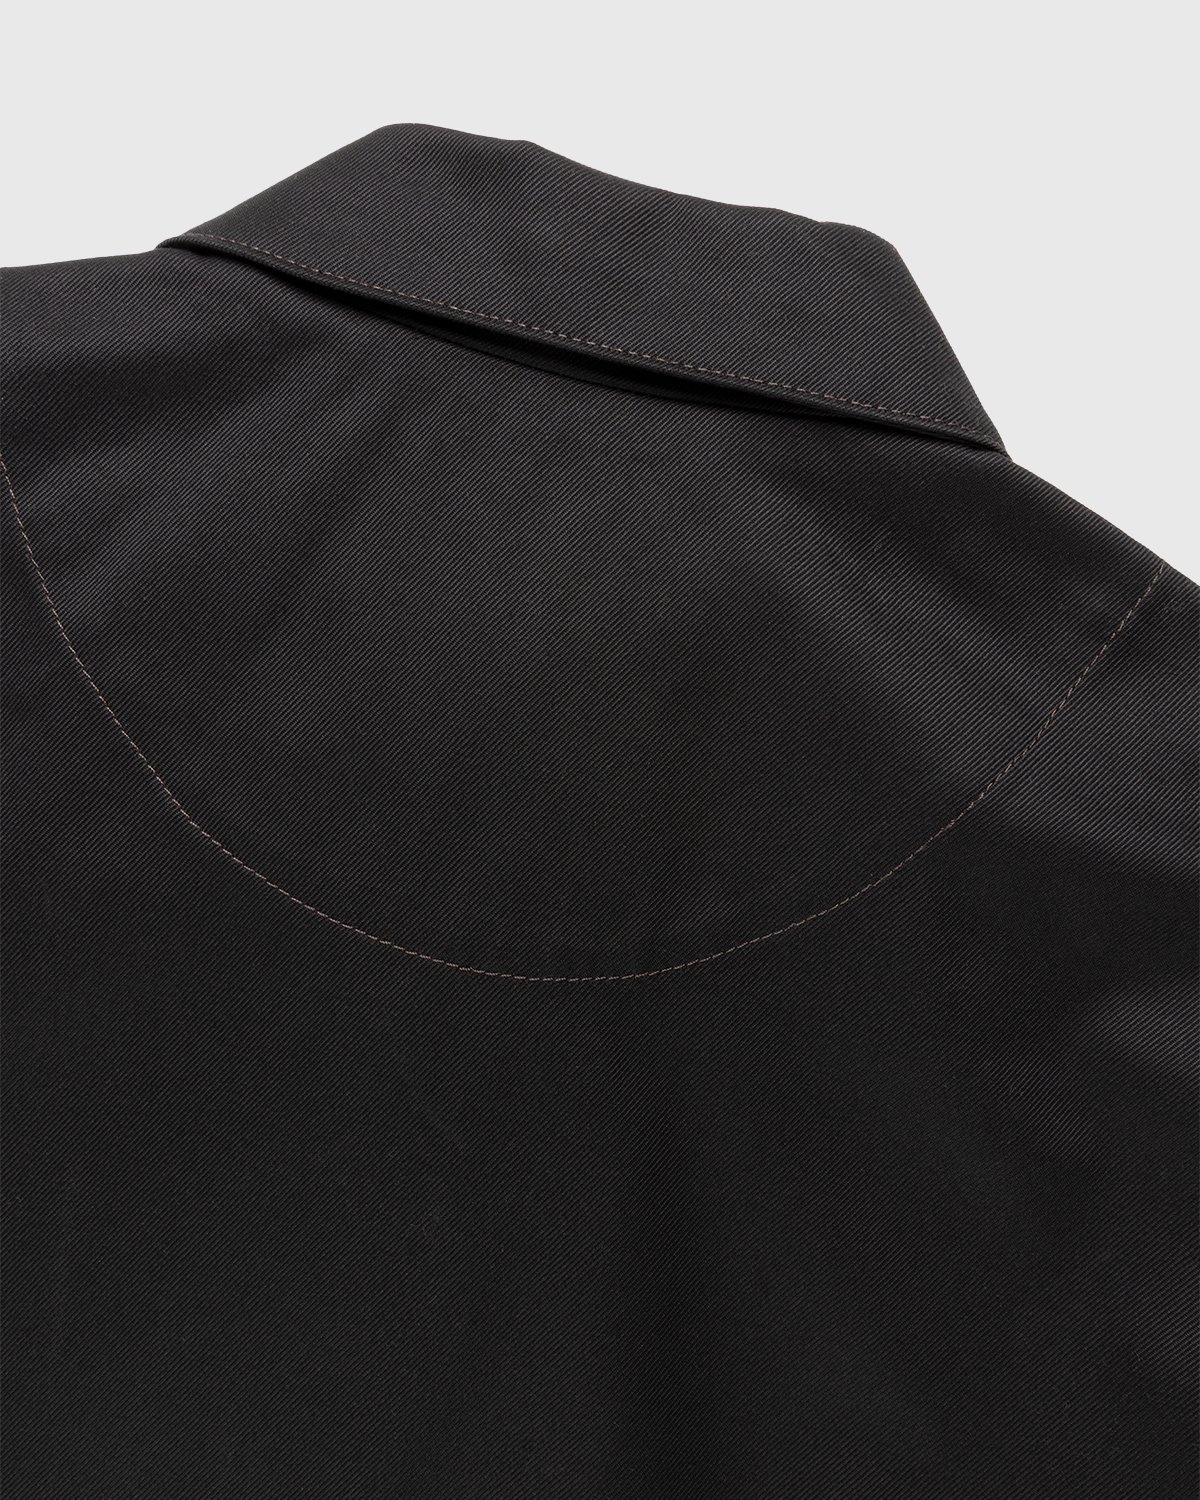 Acne Studios – Cotton Twill Jacket Black - Jackets - Black - Image 3